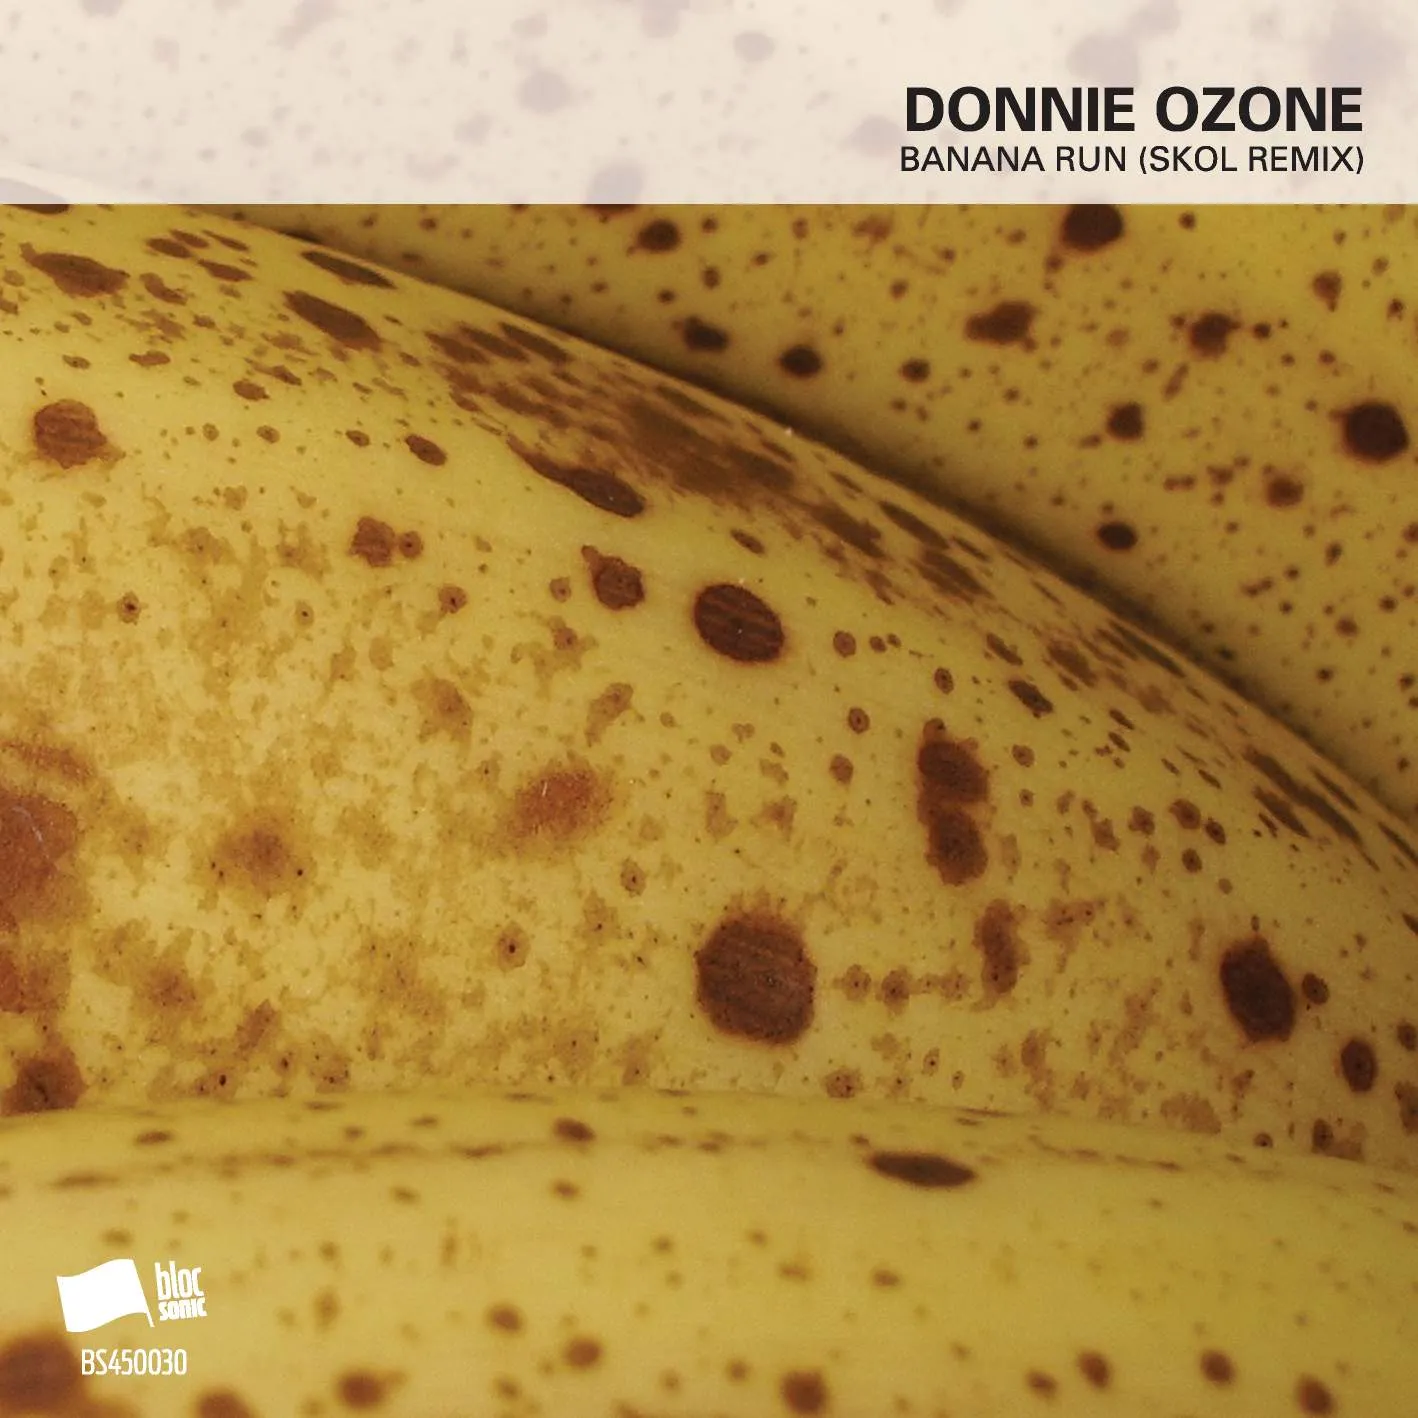 Album cover for “Banana Run (SKOL Remix)” by Donnie Ozone